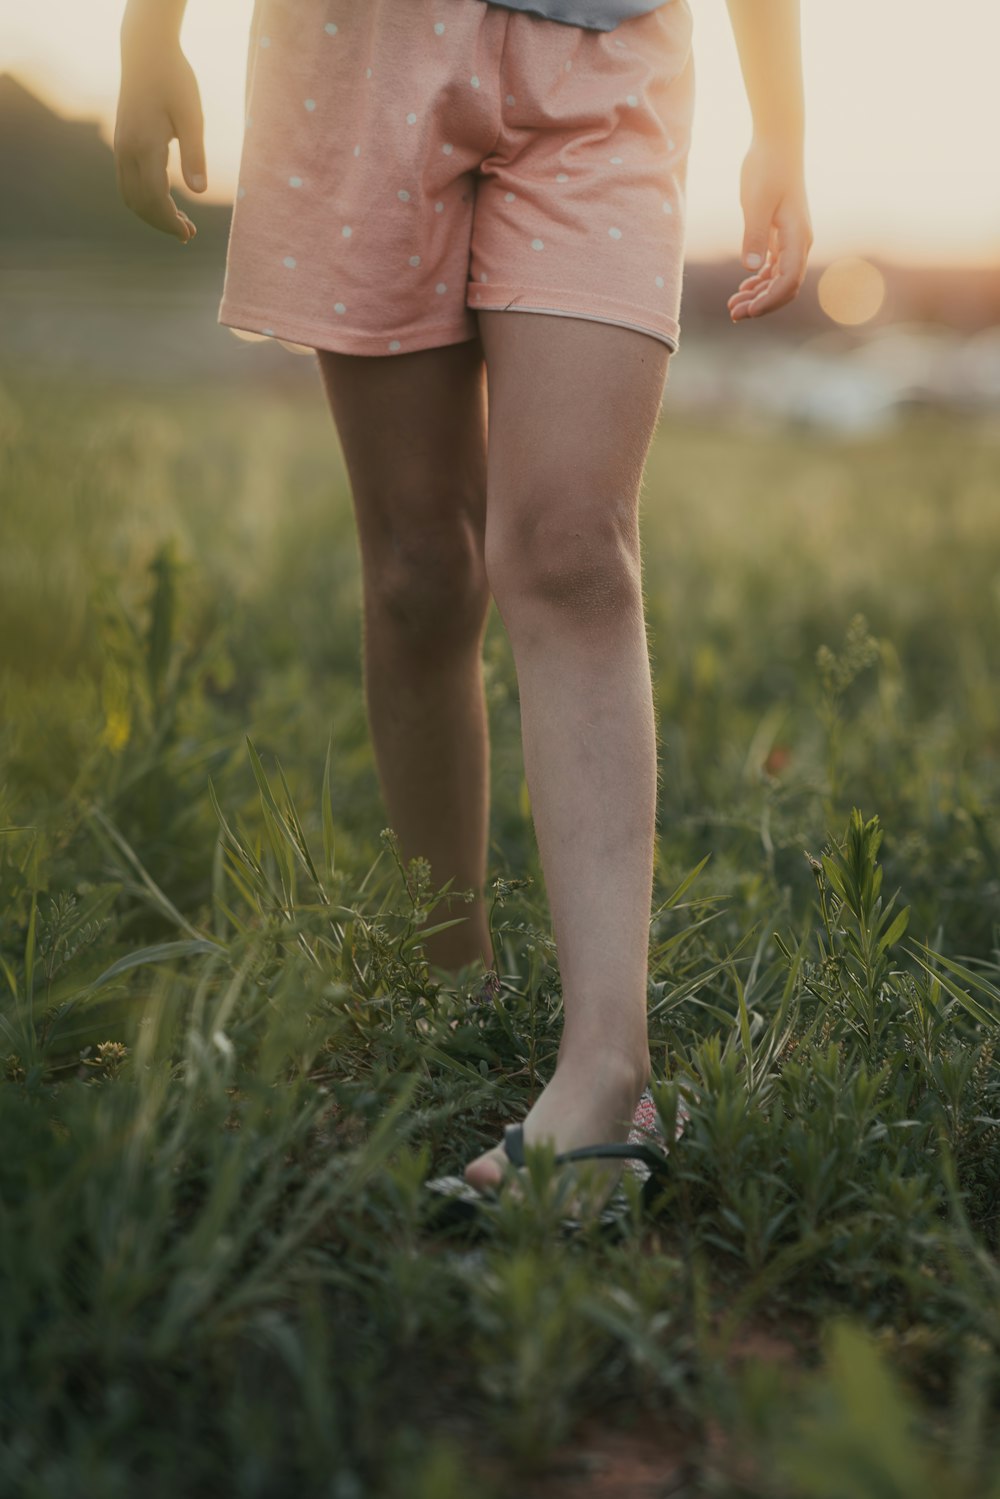 a little girl standing in a field of grass